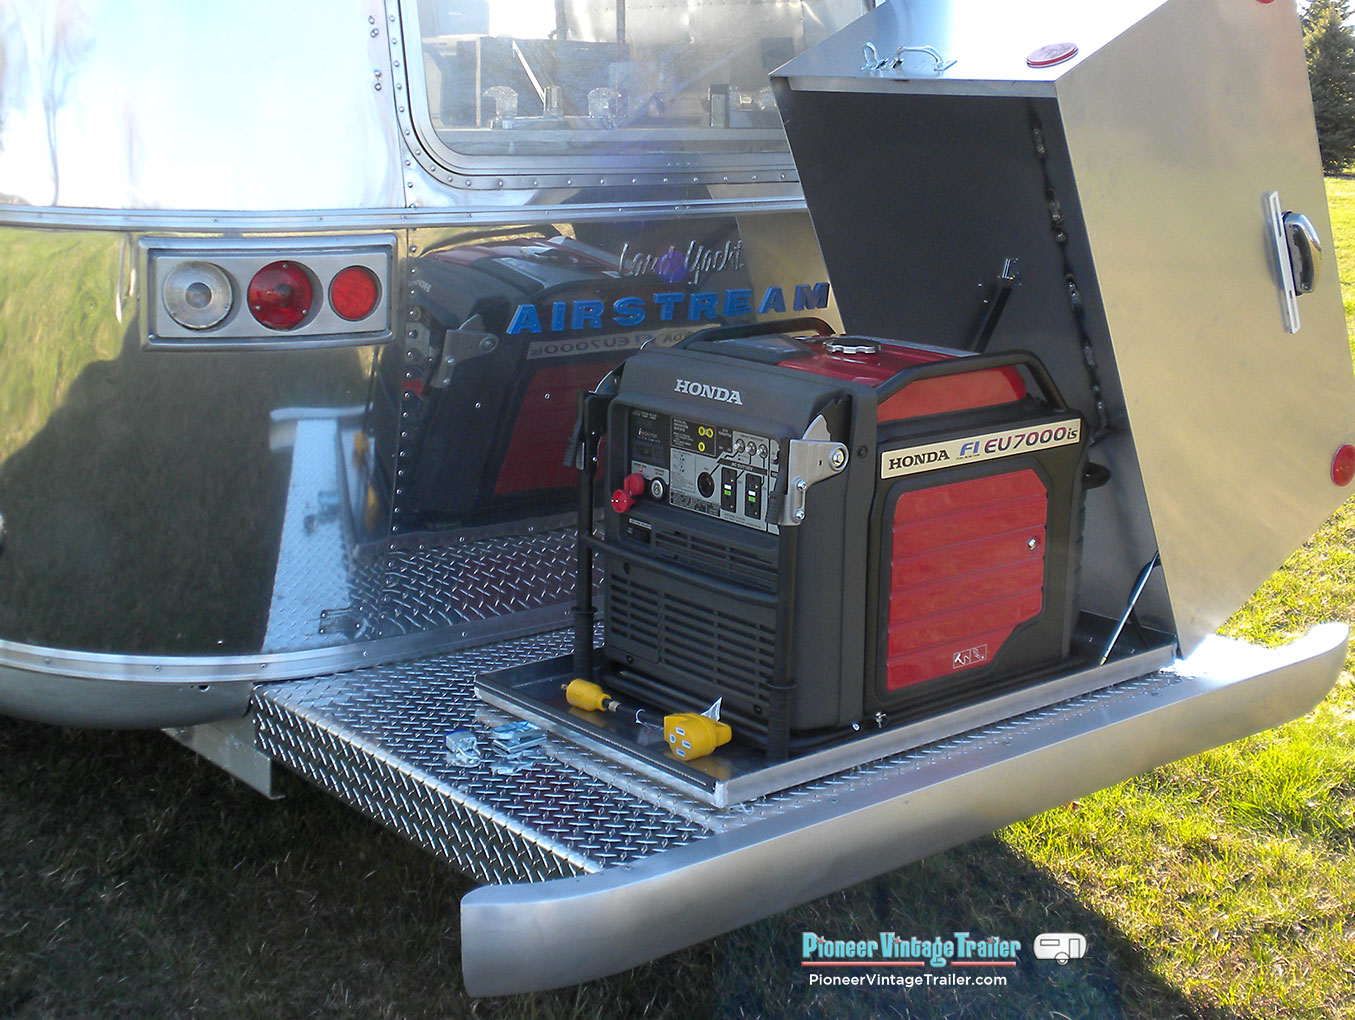 Airstream vending trailer w/generator